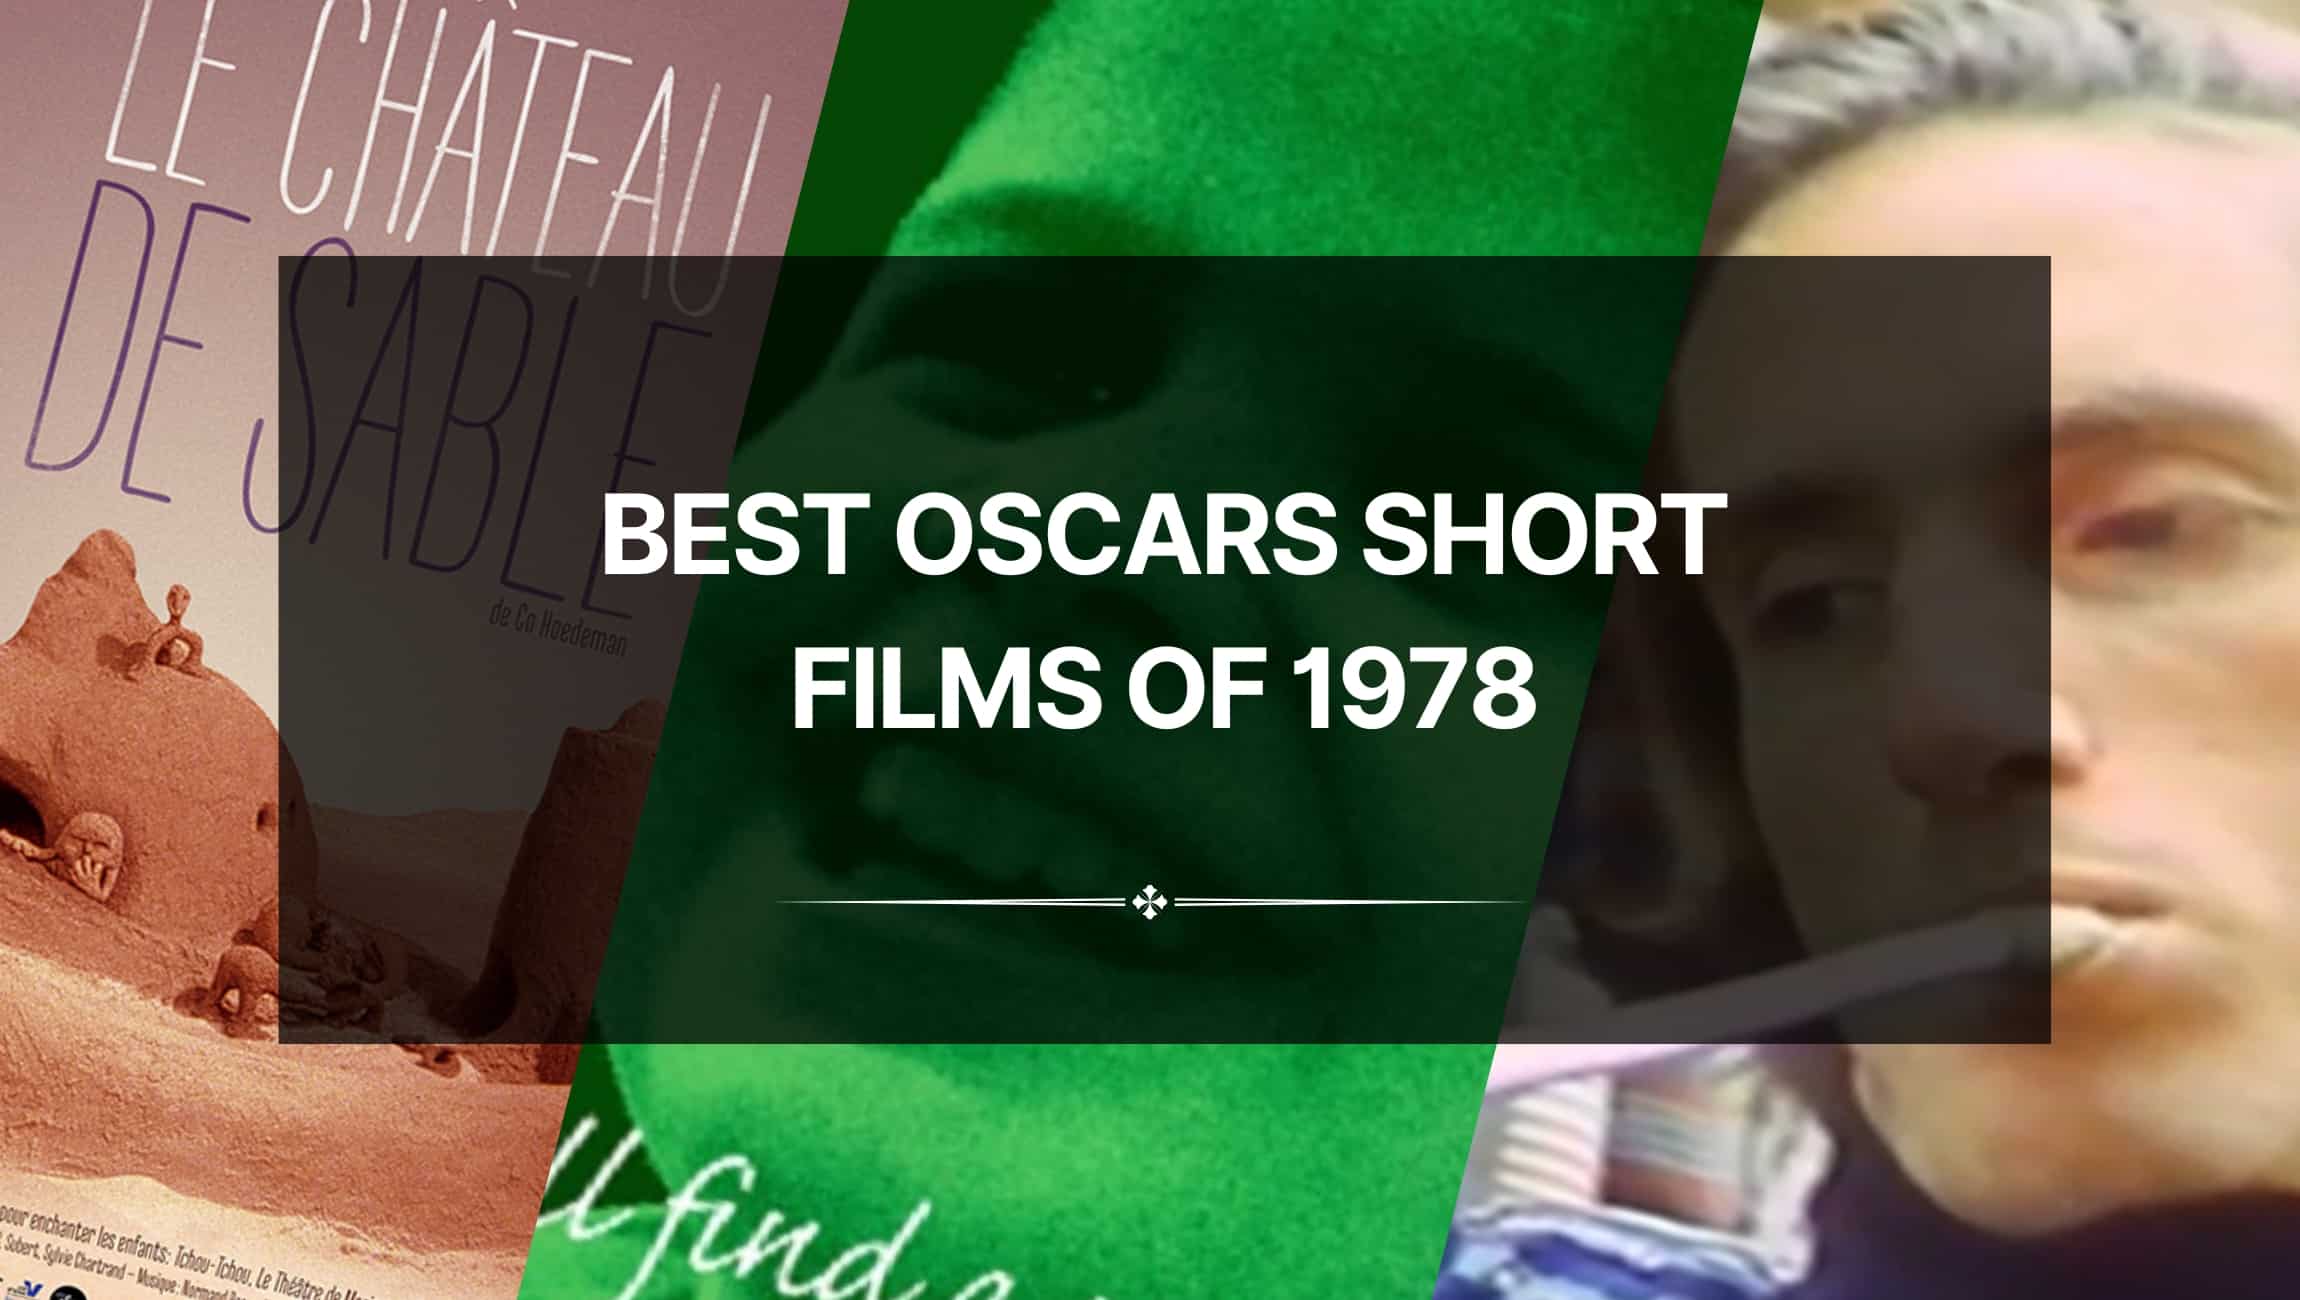 Best Oscars Short Films of 1978